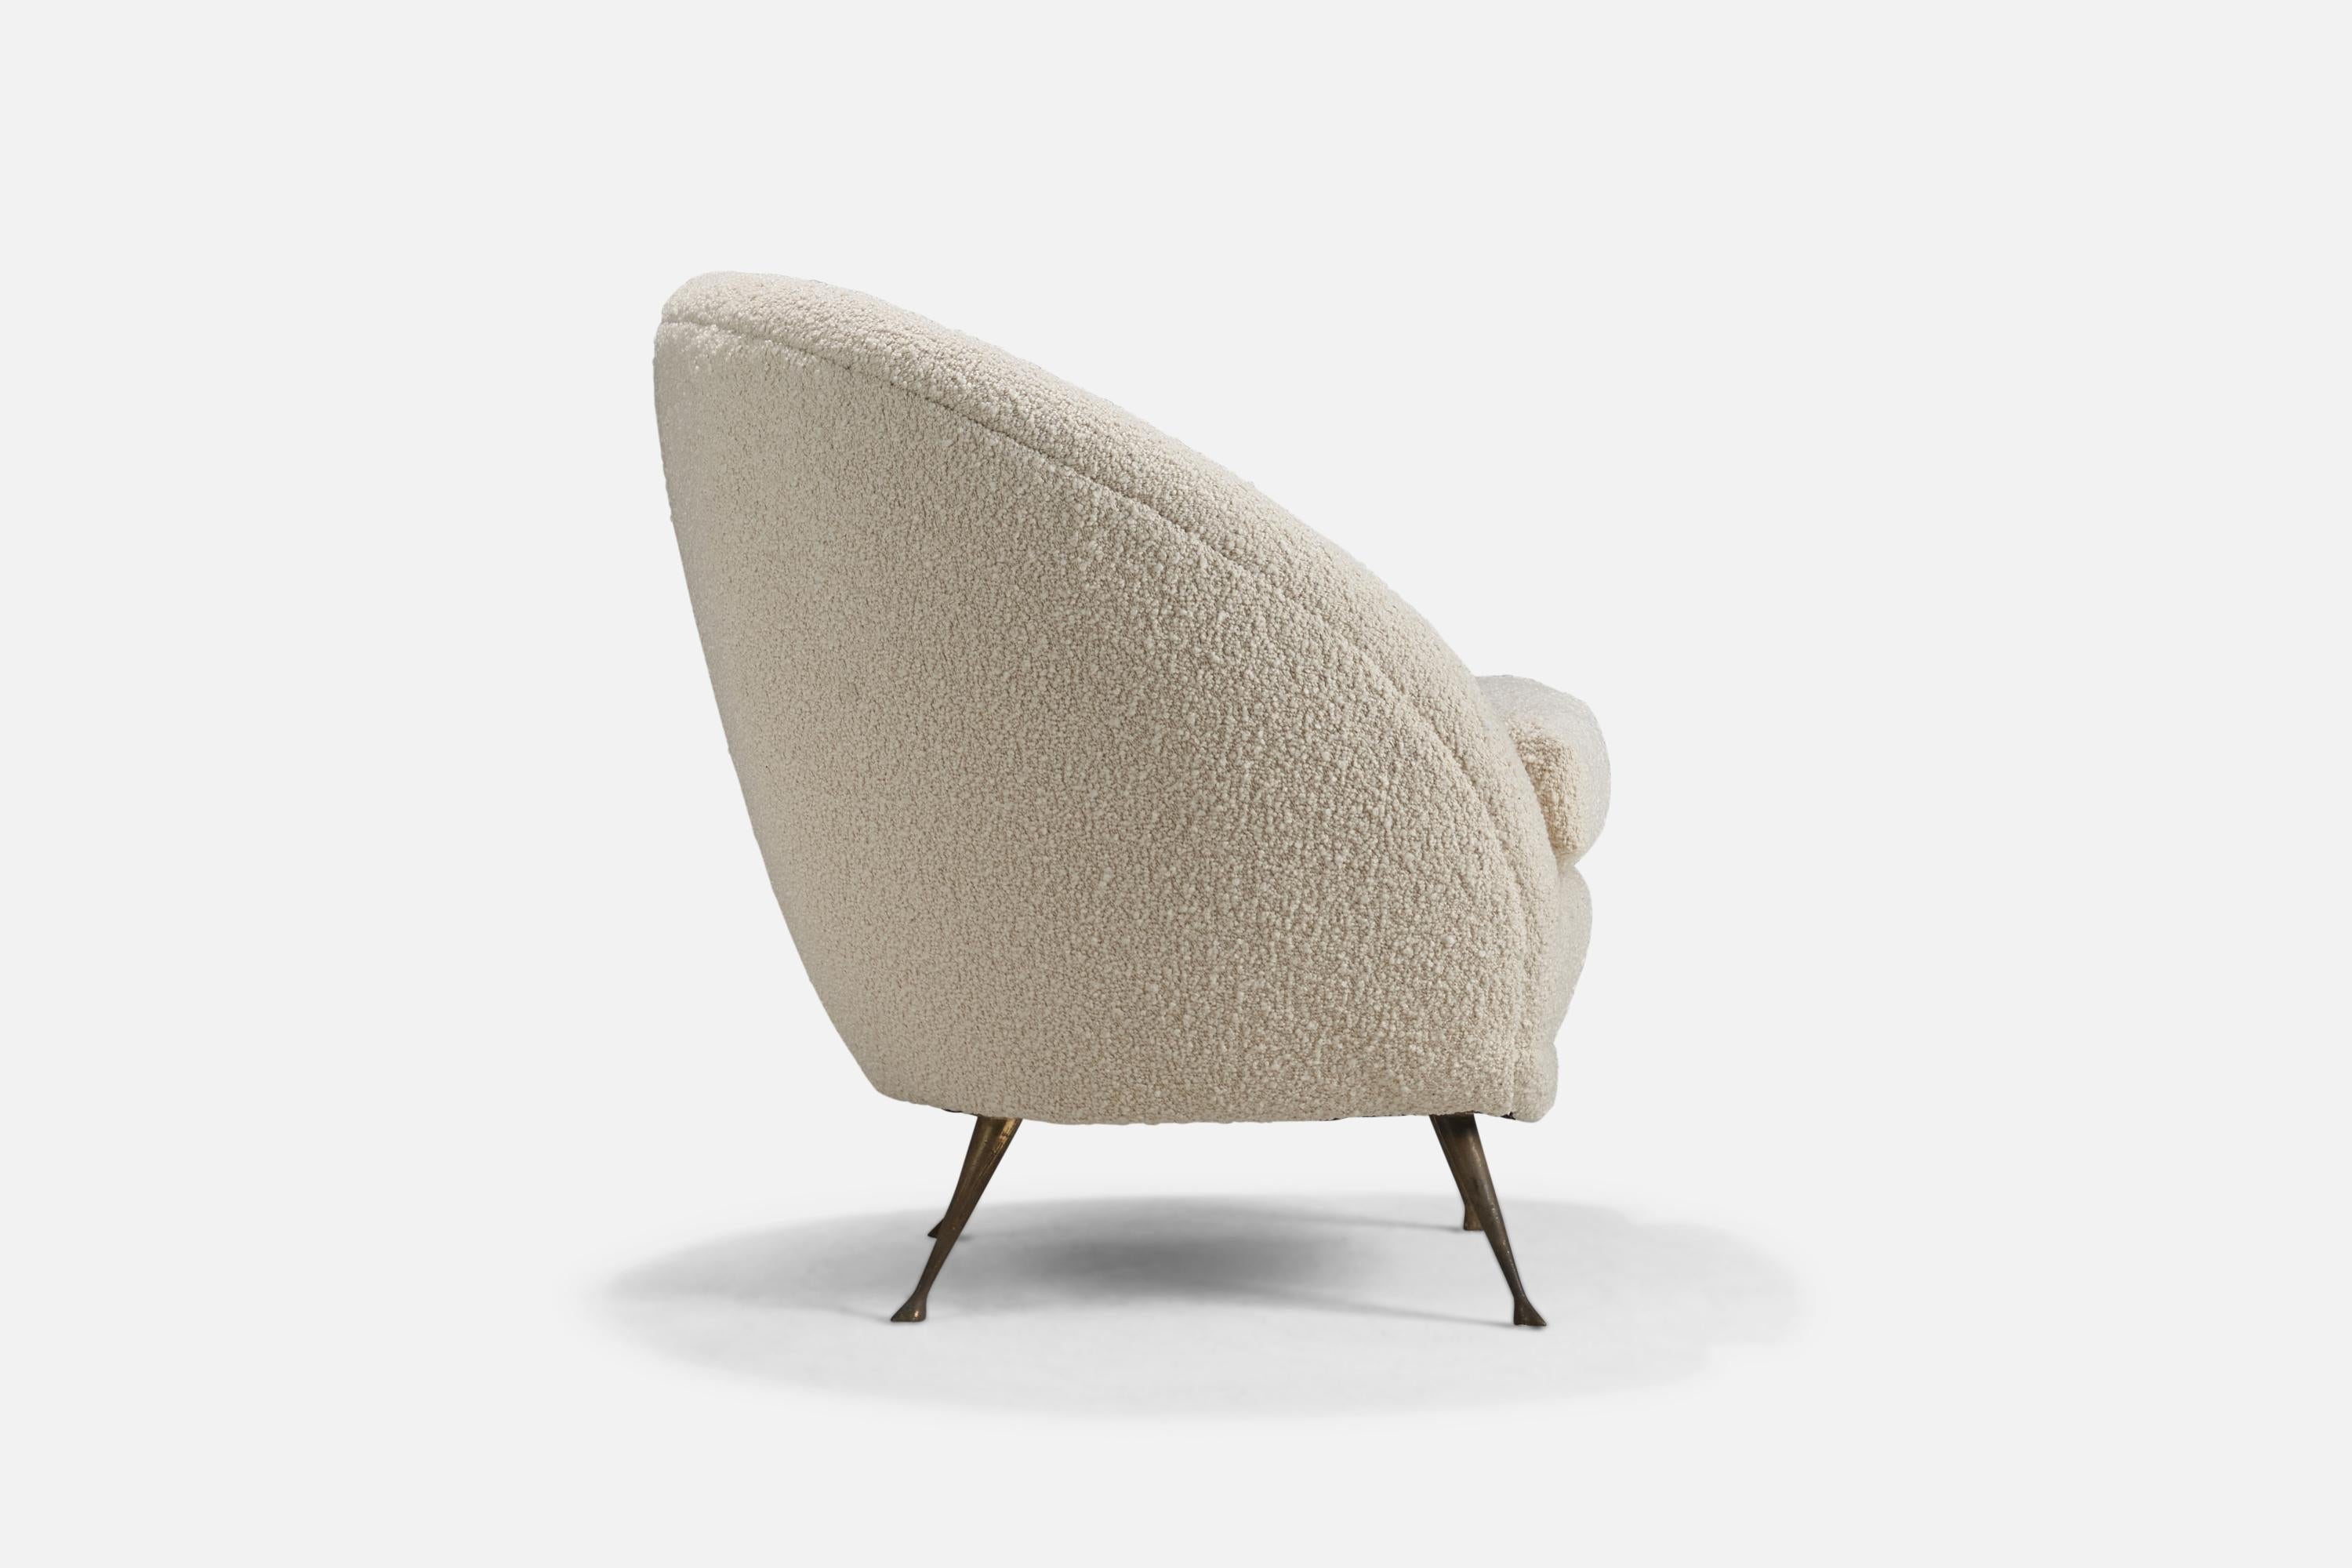 Mid-20th Century Federico Munari, Lounge Chairs, White Fabric, Brass, Isa Bergamo, Italy, 1950s For Sale